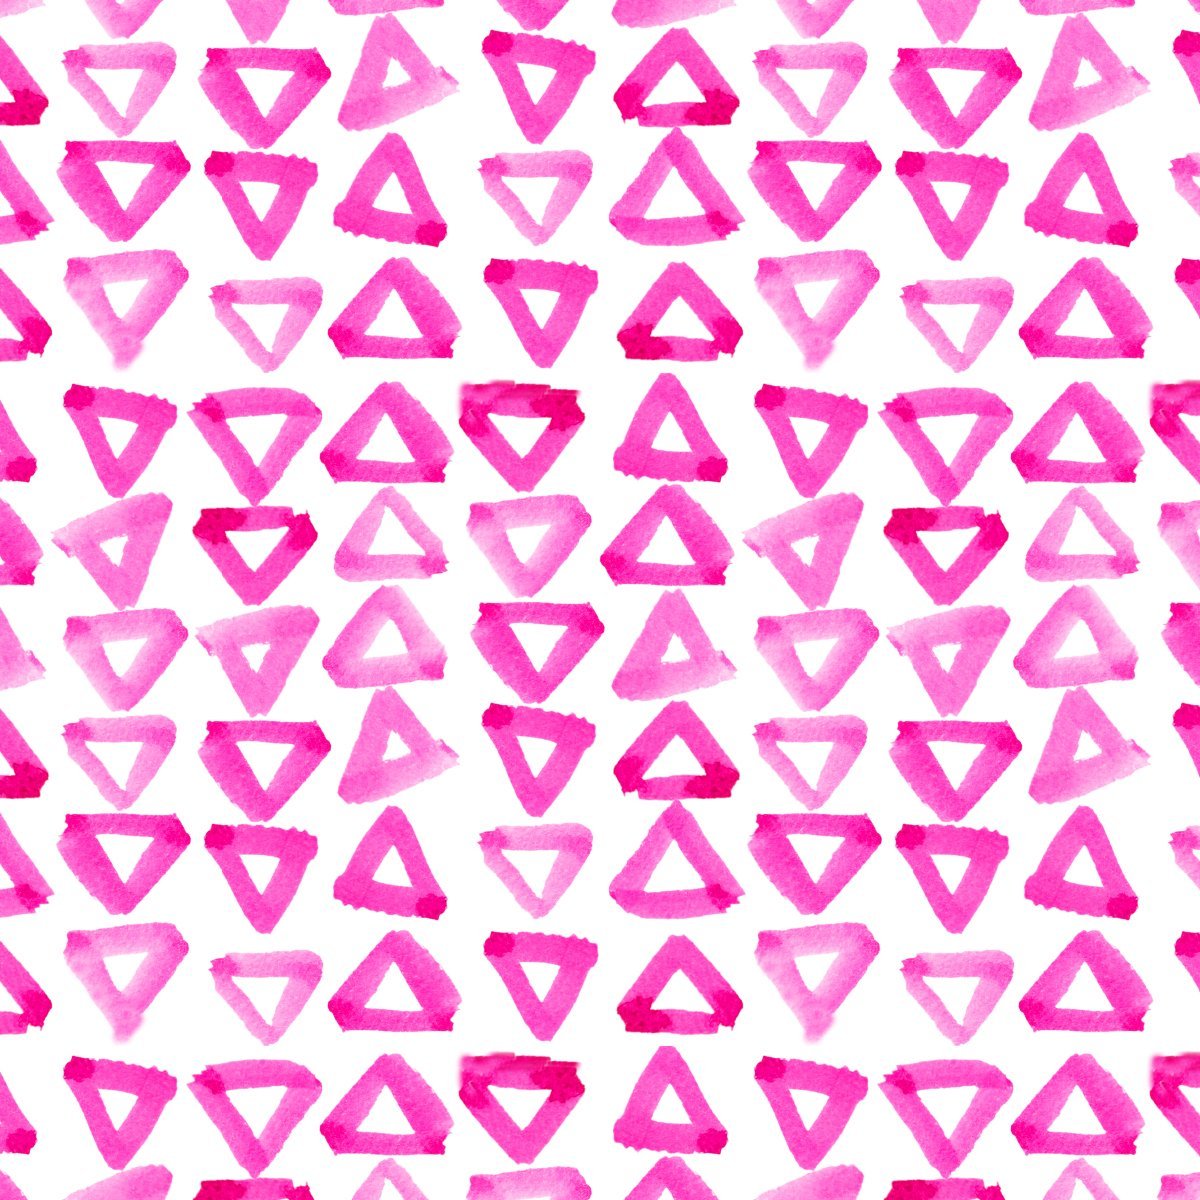 Wallpaper Pink Triangles Wallpaper dombezalergii